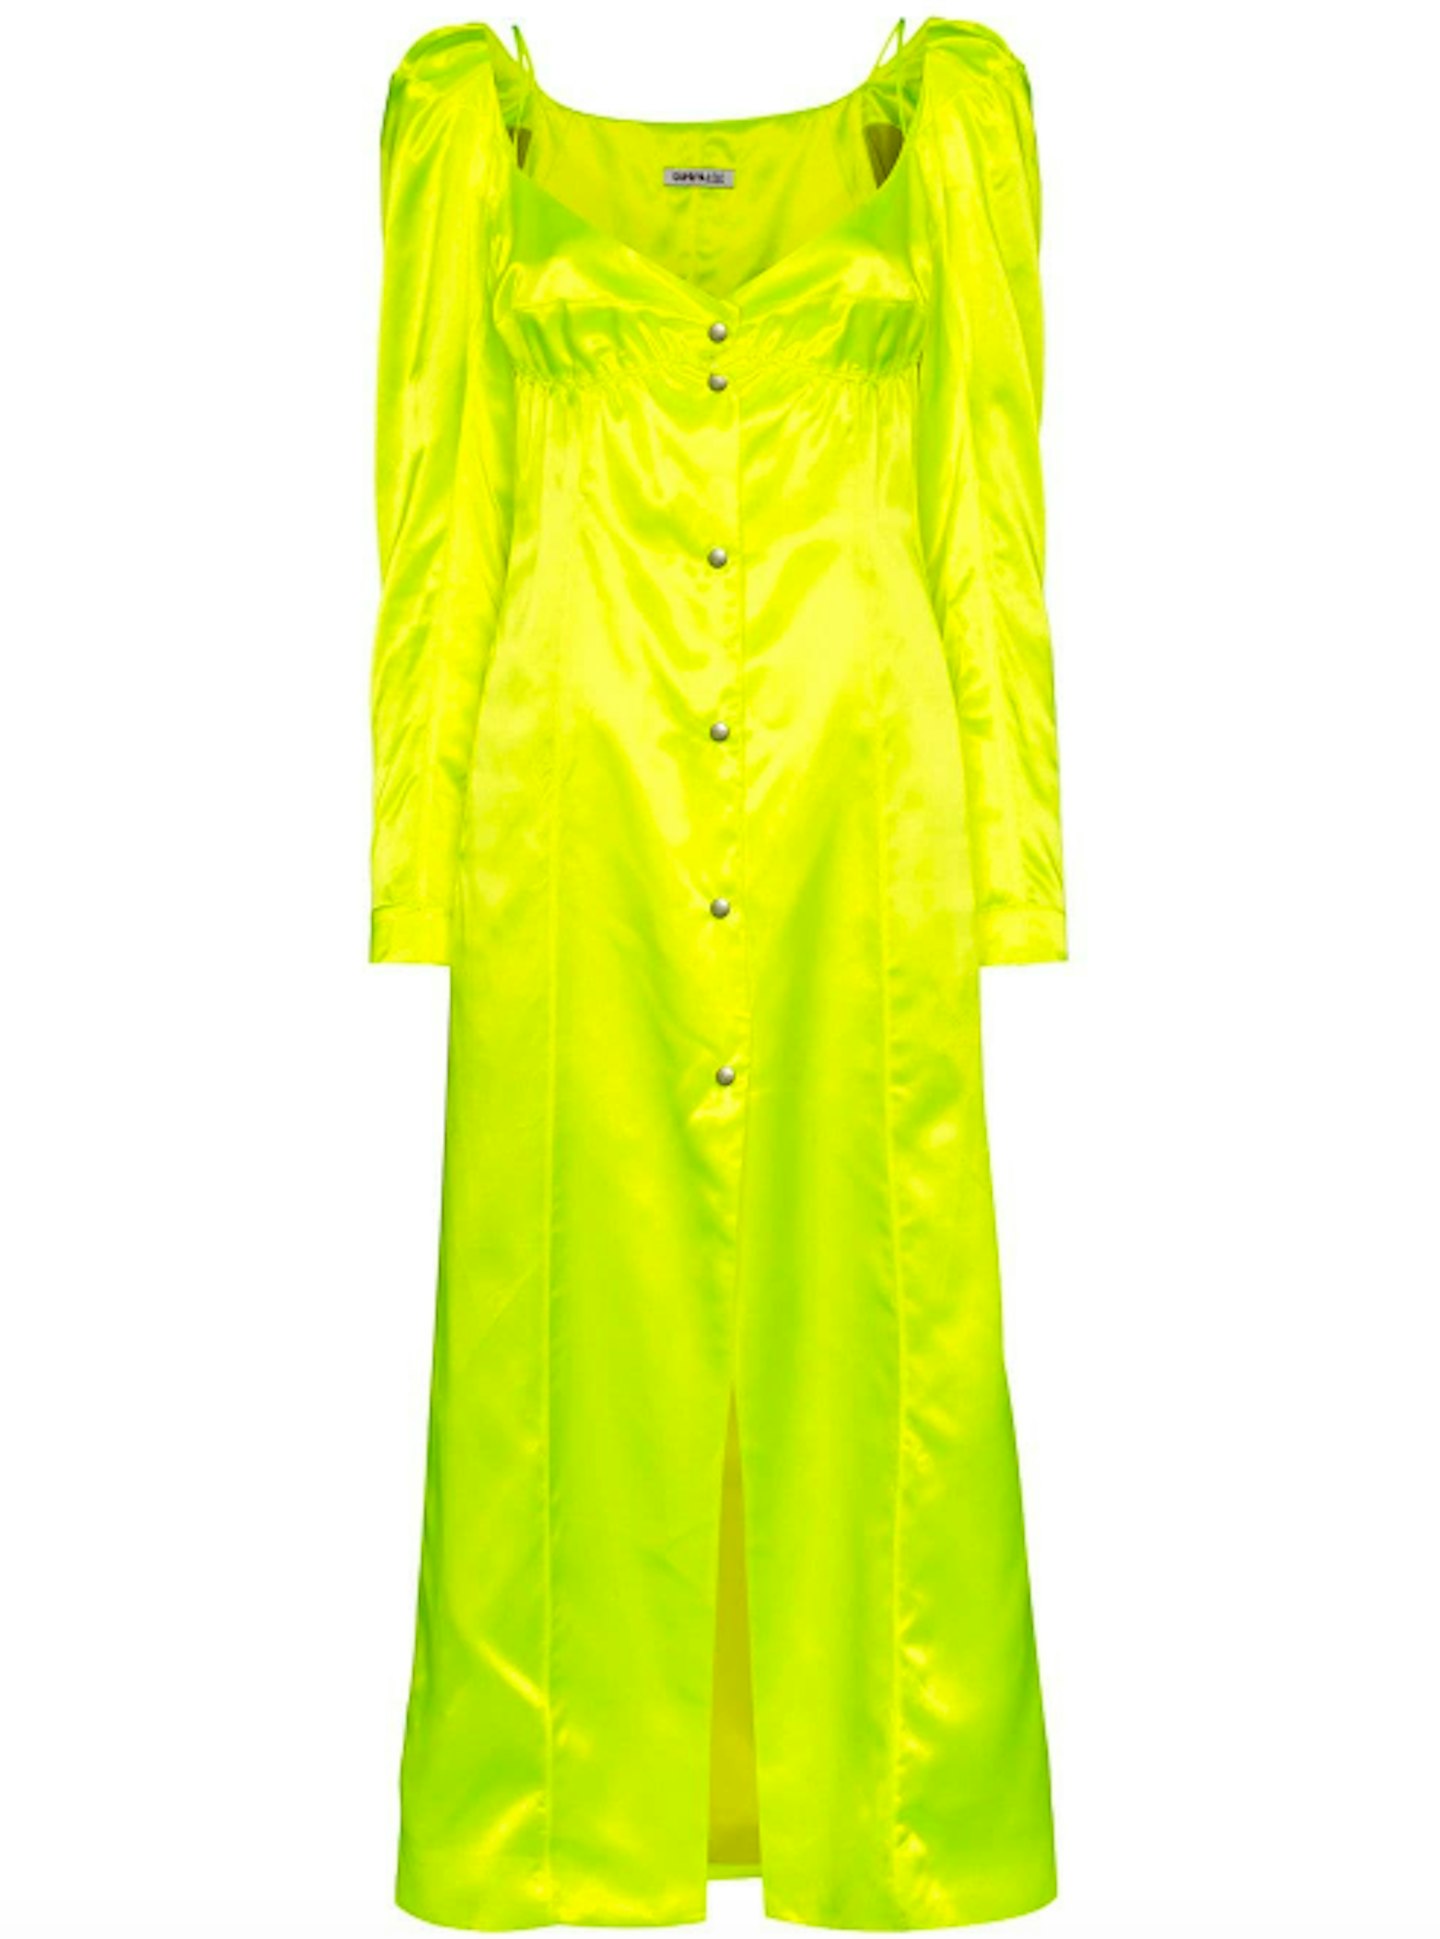 Supriya Lele, Satin Midi Dress, £299 at Farfetch